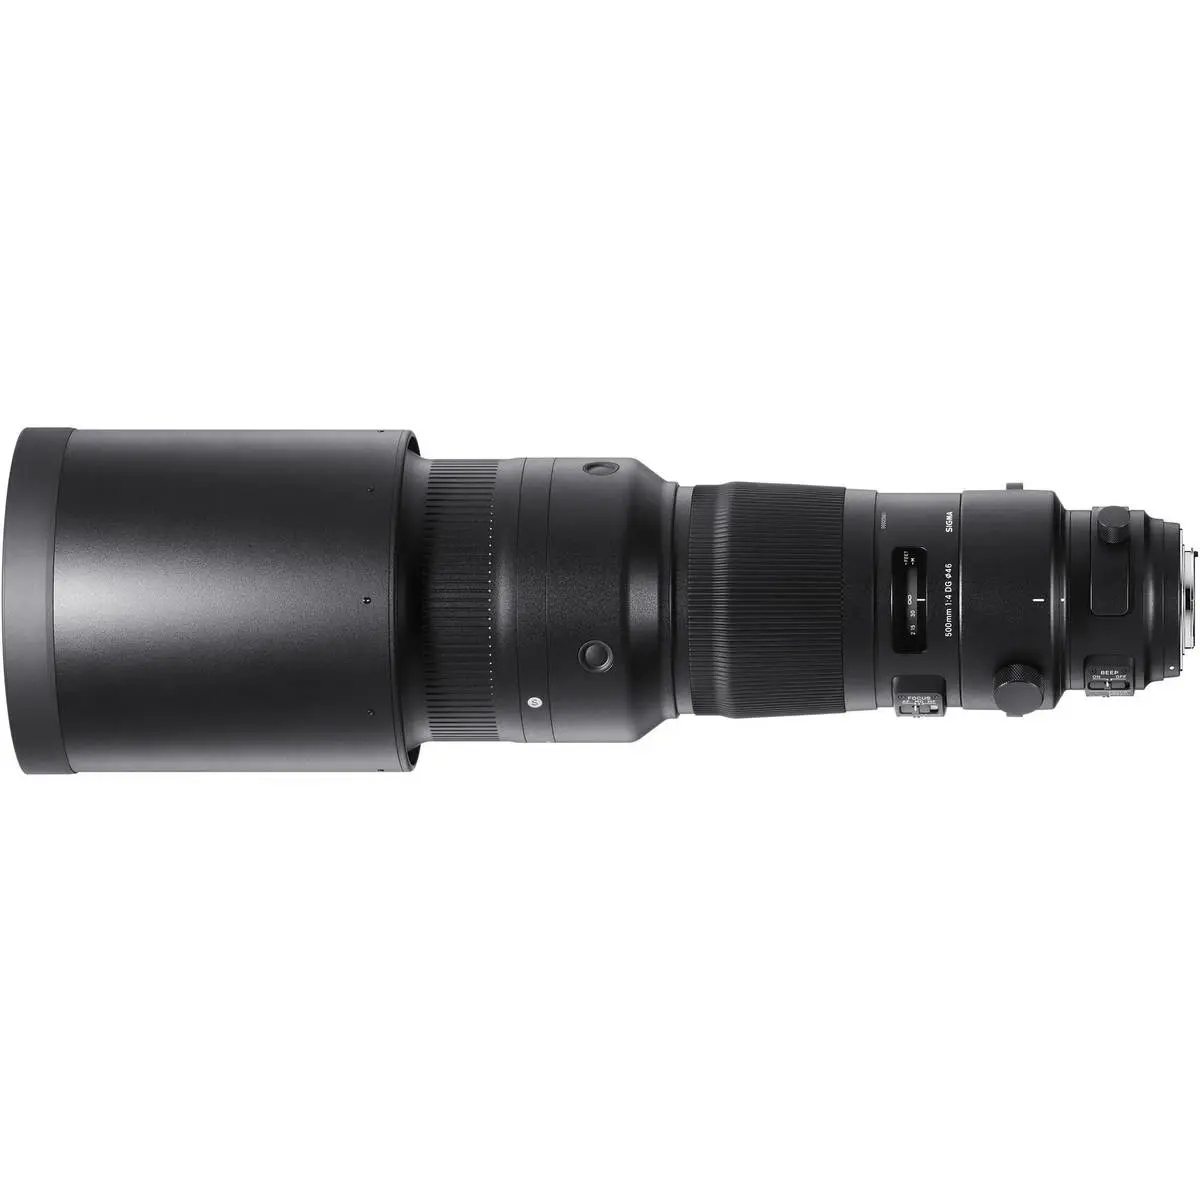 2. Sigma 500mm F4 DG OS HSM | Sports (Canon) Lens